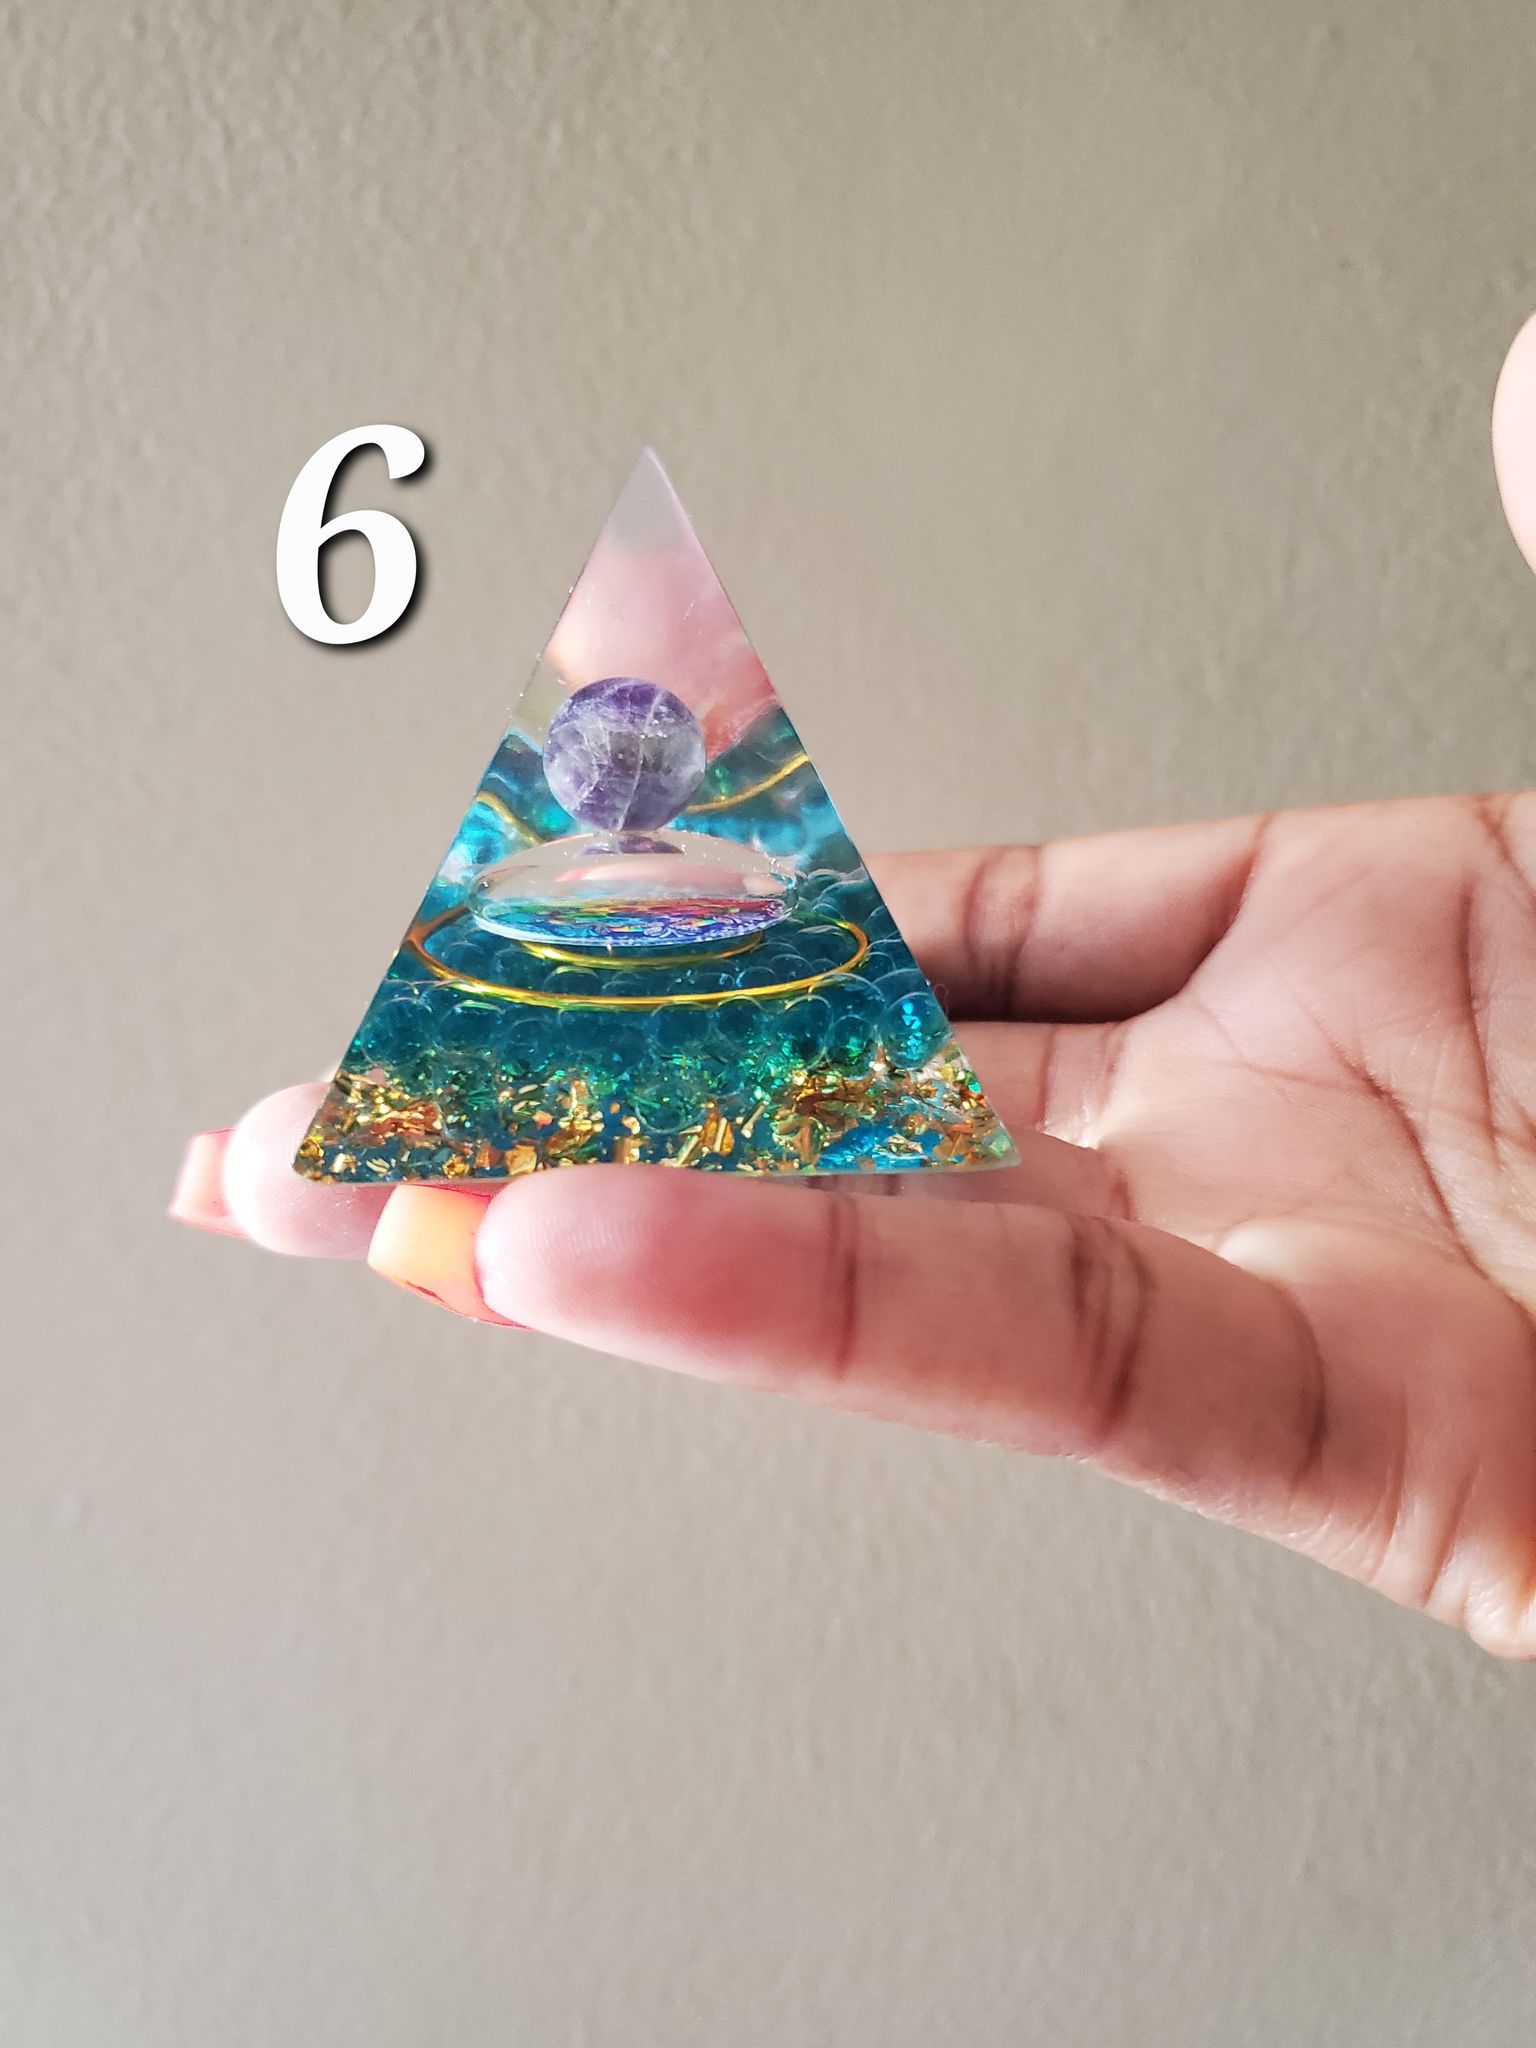 Amethyst, chakra, coil pyramid